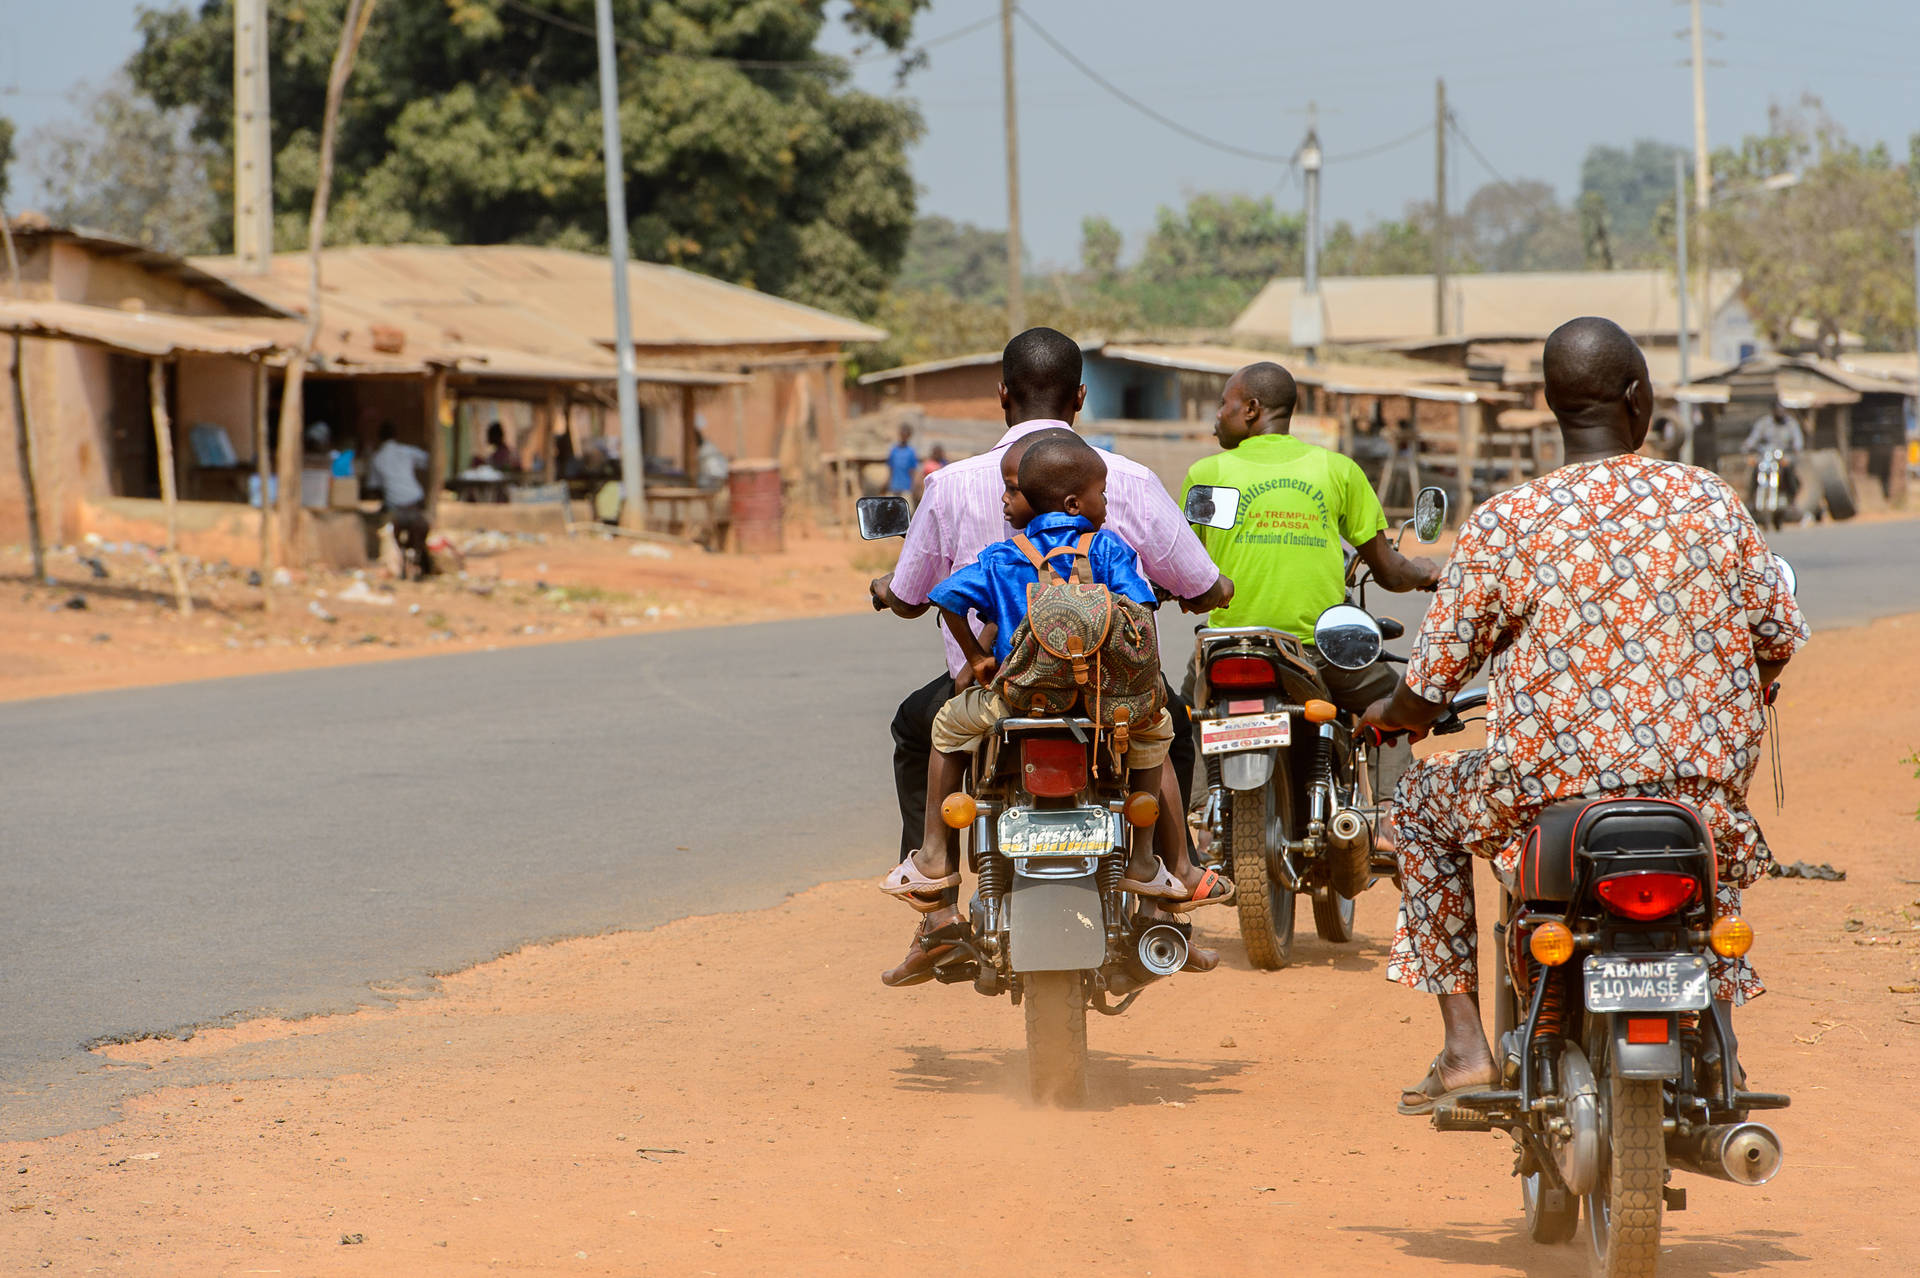 Benin Motorcycle Riders Picture